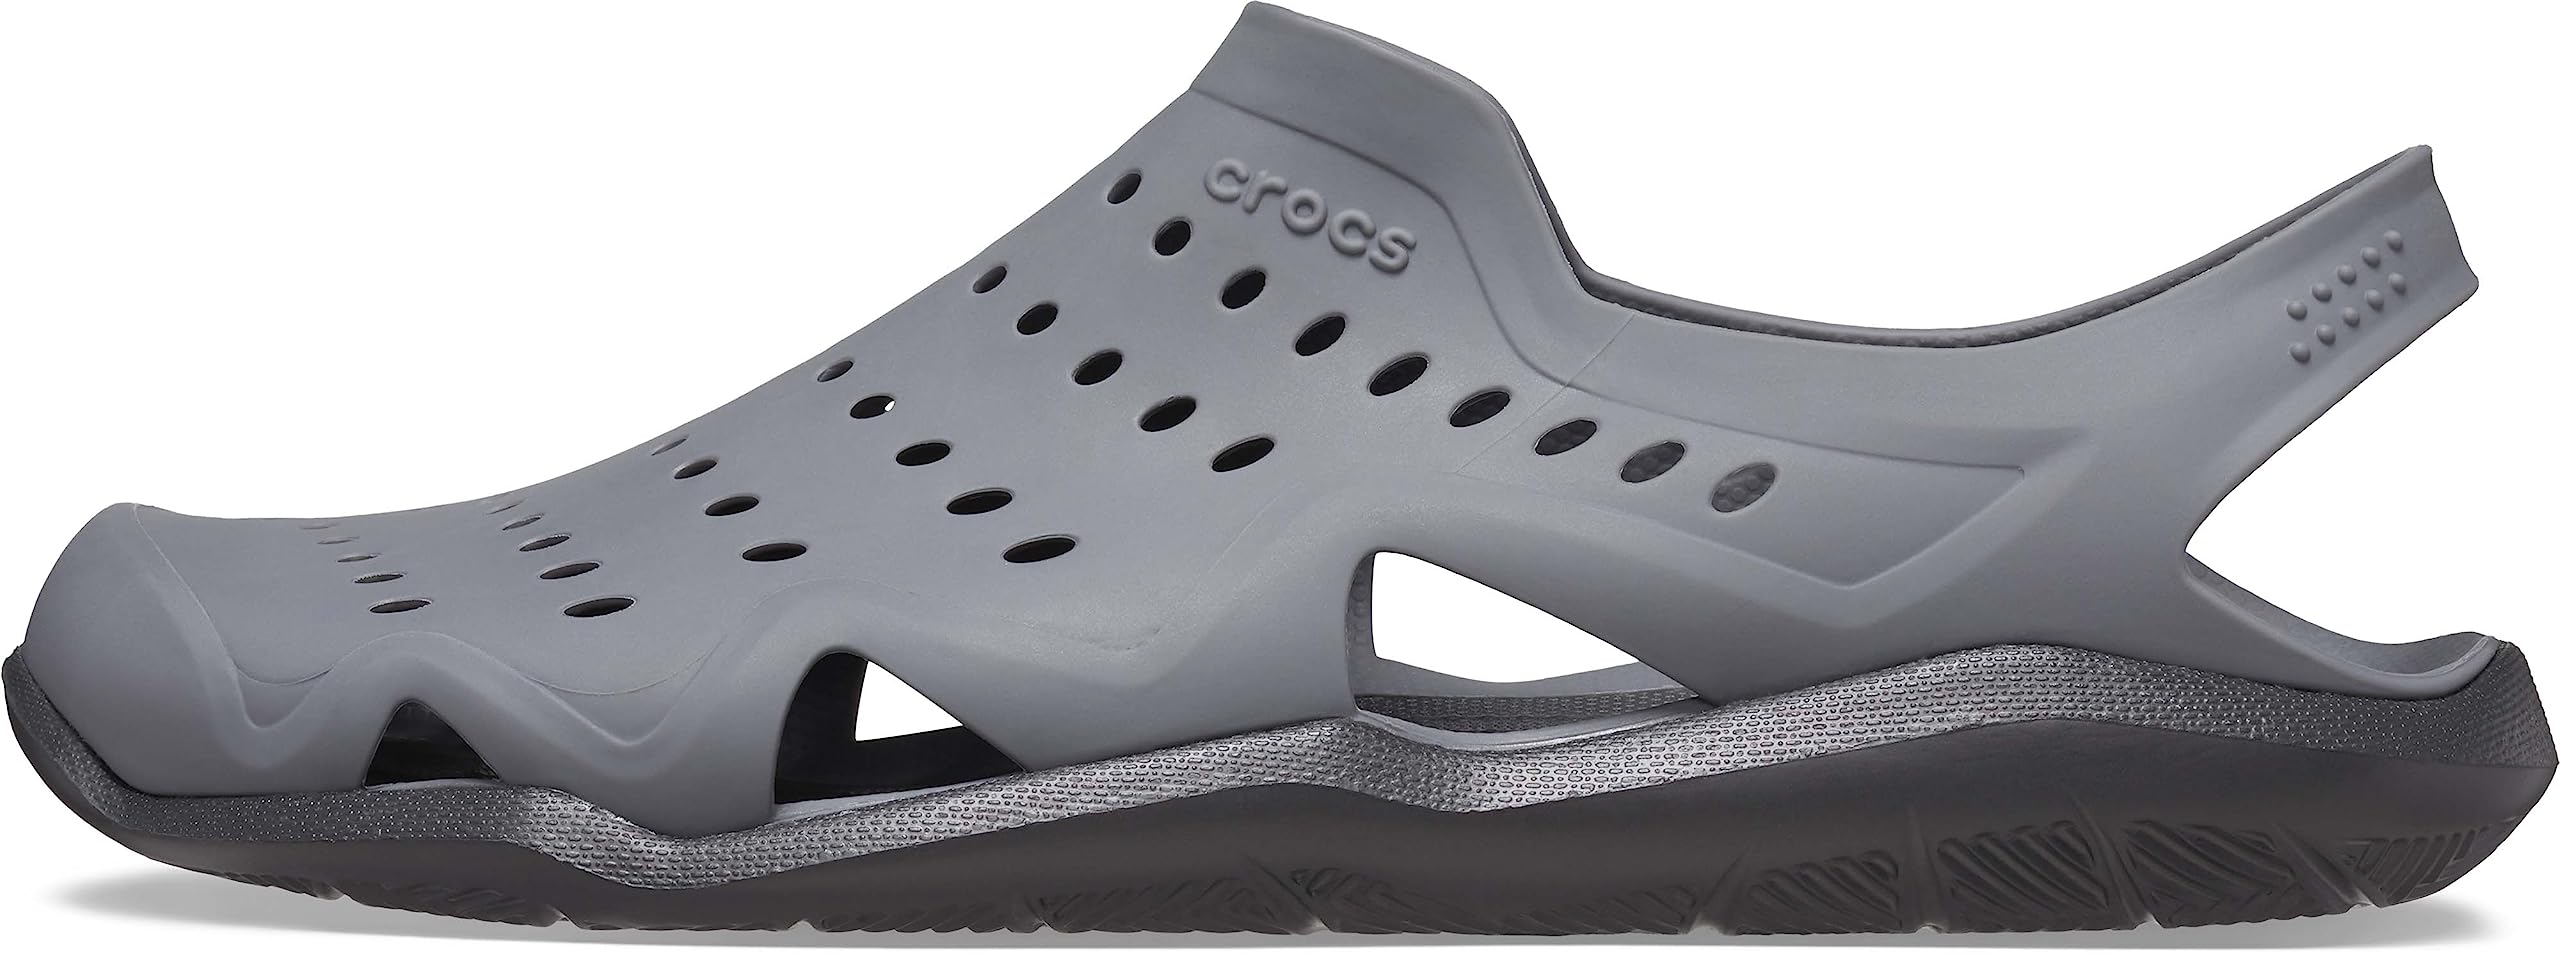 Crocs Men's Swiftwater Wave Sandals, Water Shoes, Charcoal/Graphite, 7 Men